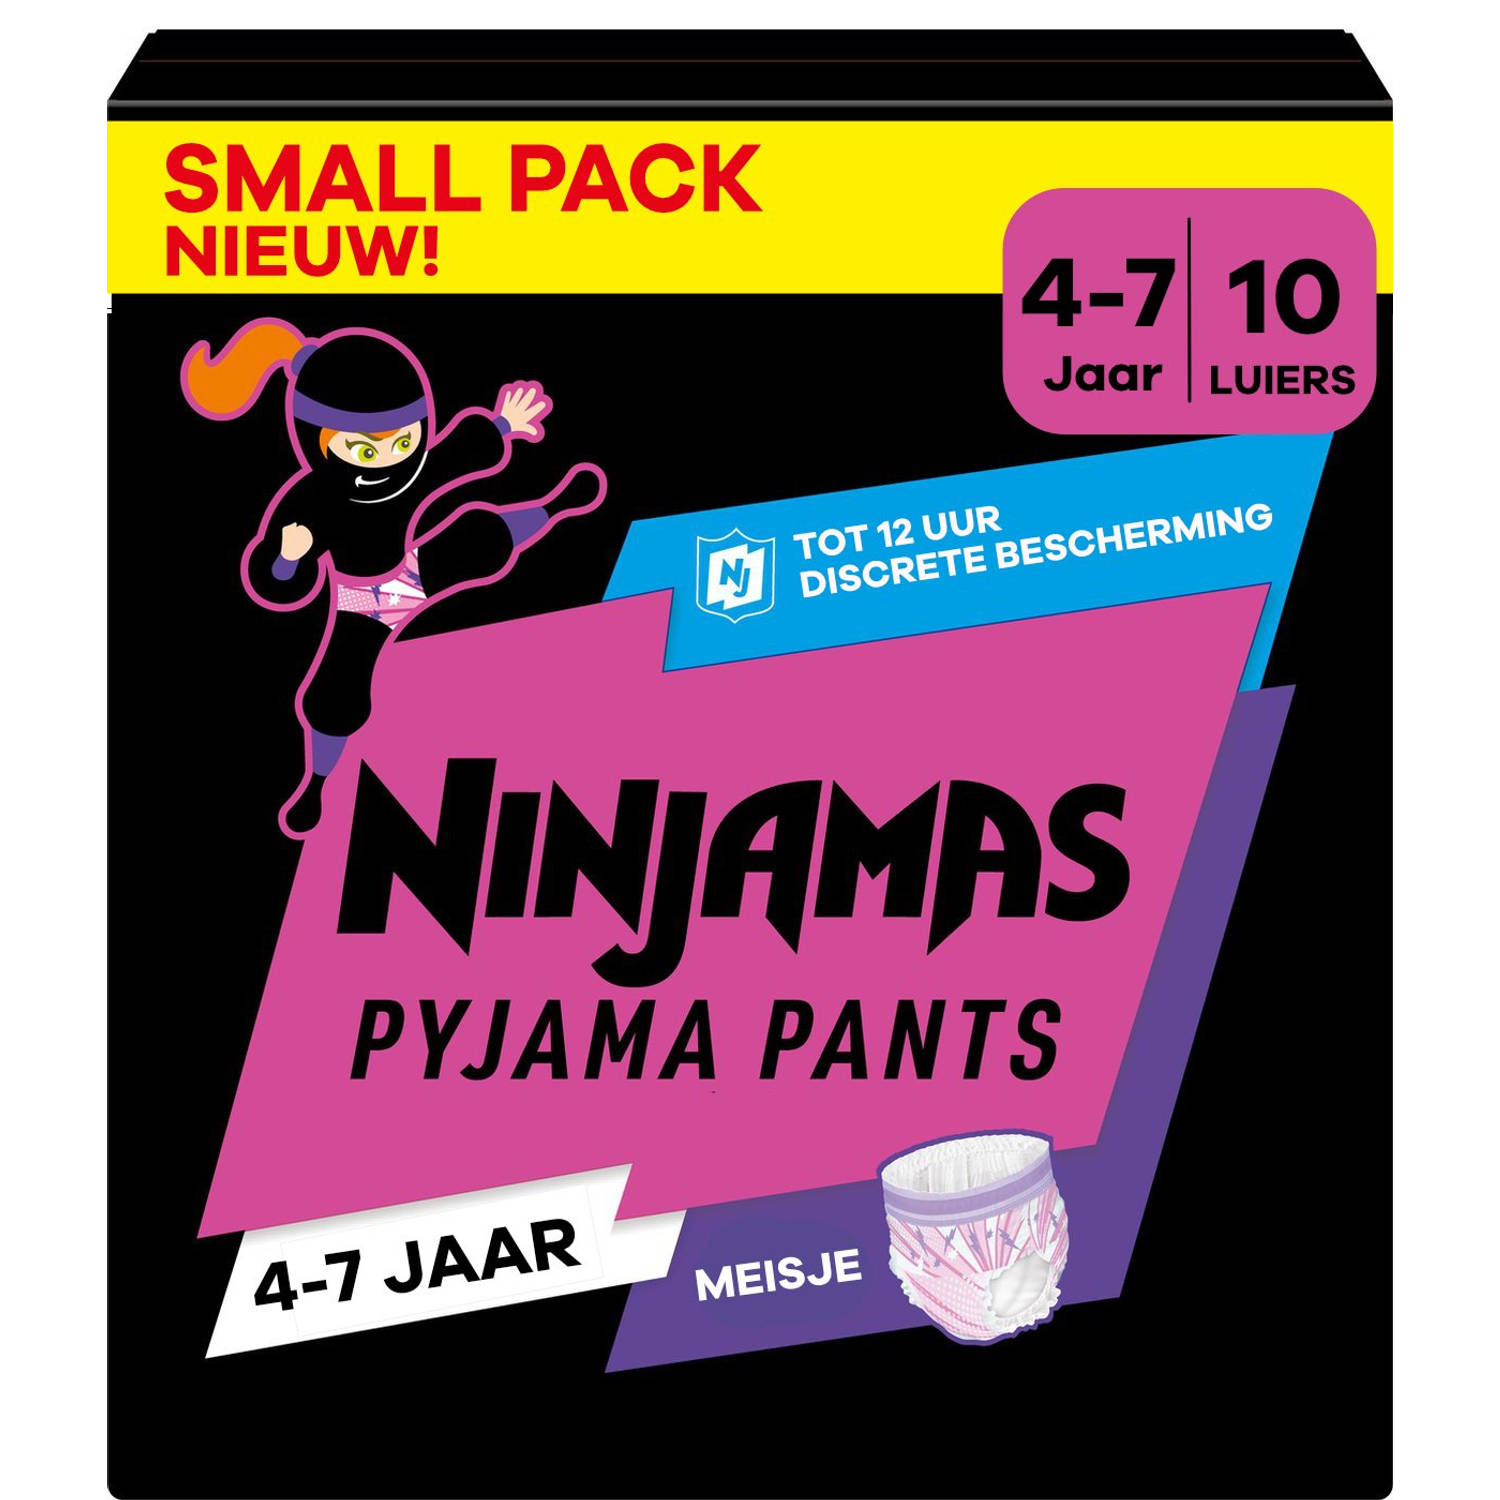 Pampers Ninjamas Pyjama Pants Nacht Meisje 4-7 jaar Small Pack 10 luierbroekjes